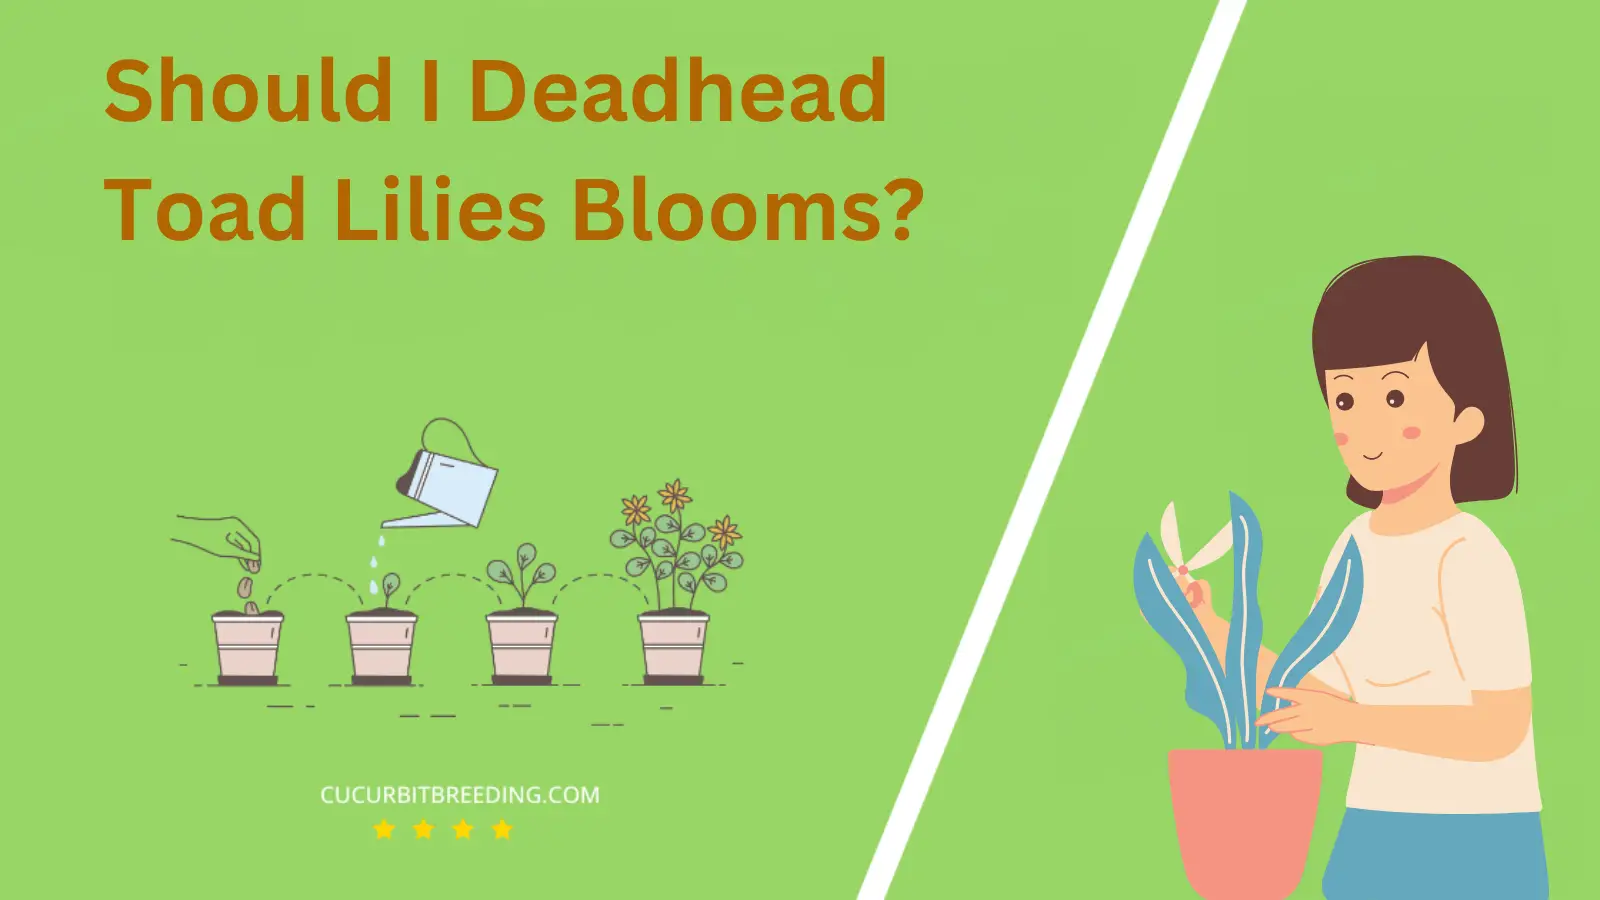 Should I Deadhead Toad Lilies Blooms?